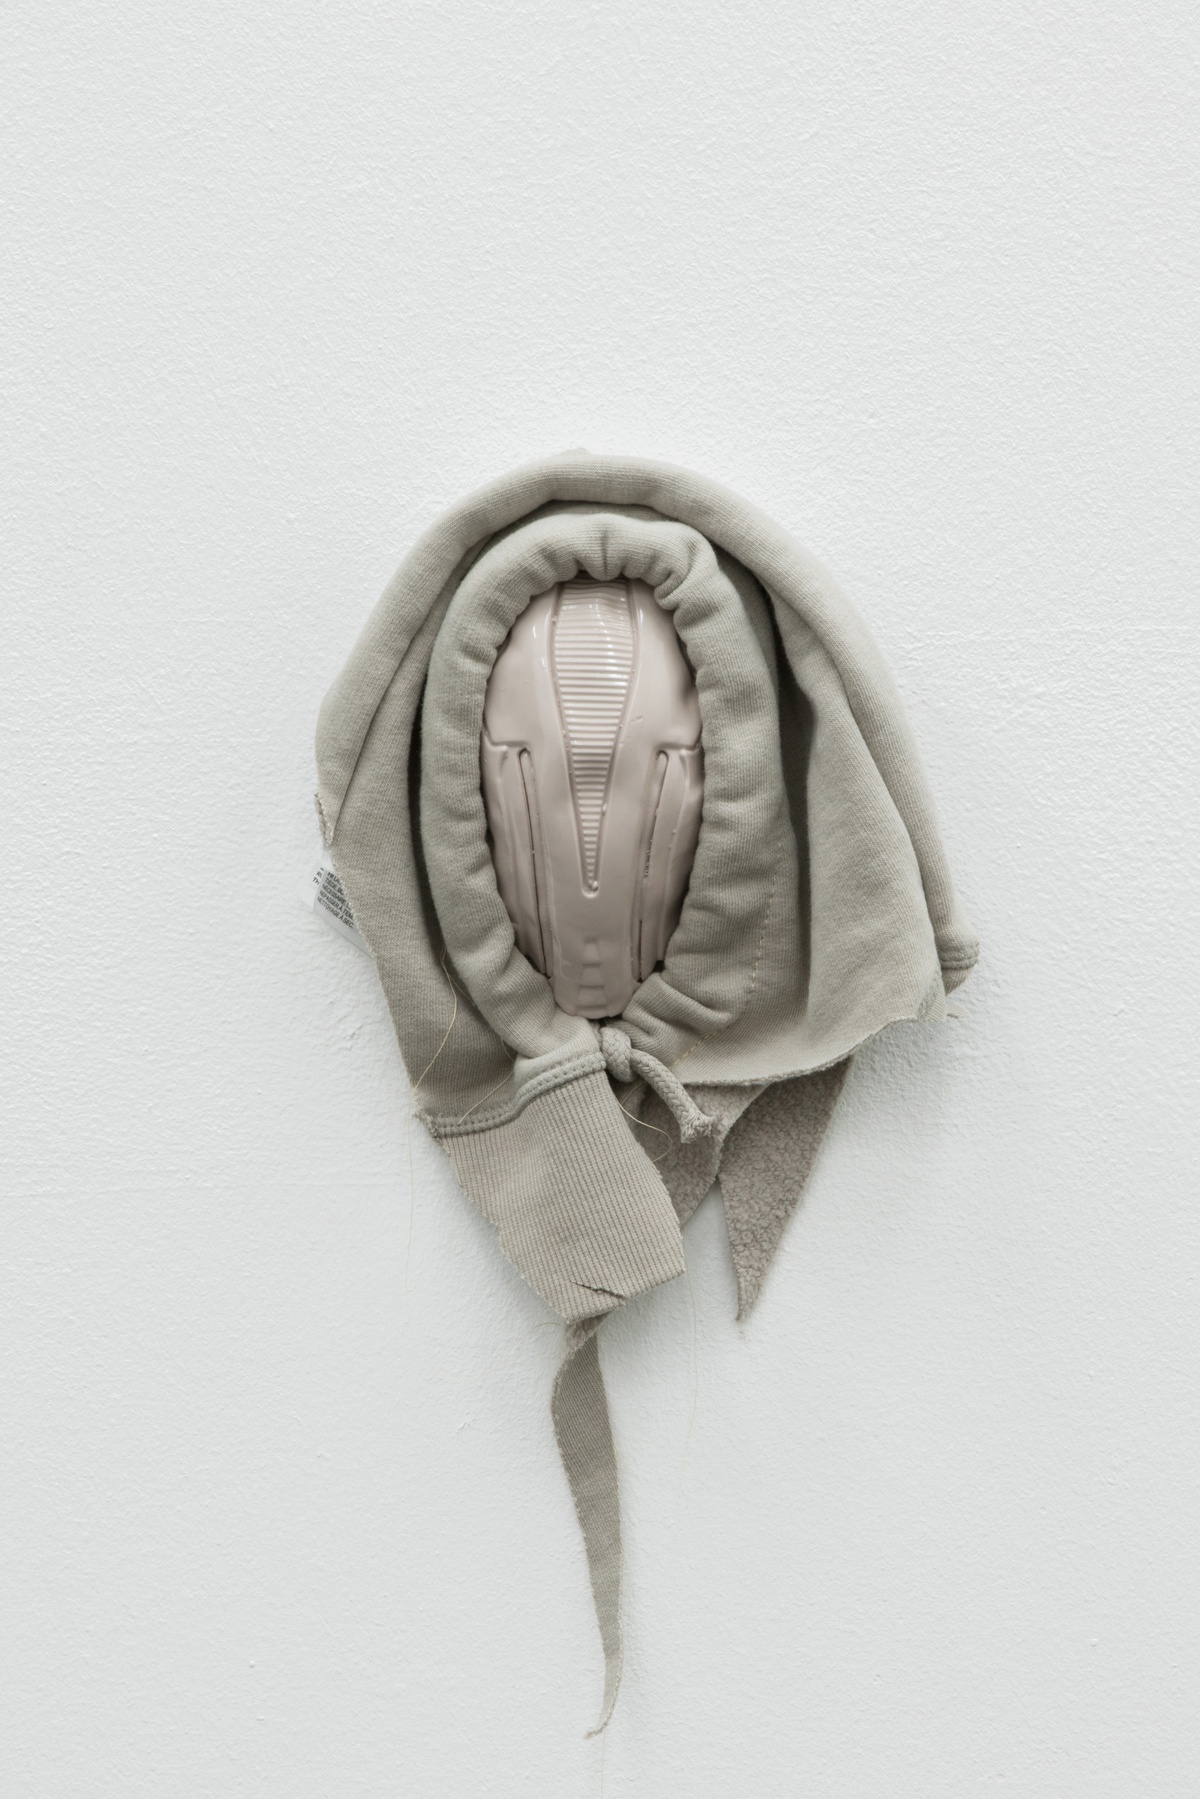 Daphne Ahlers, Schamkapsel, 2019plaster, spraypaint, mixed media34 x 20 cm